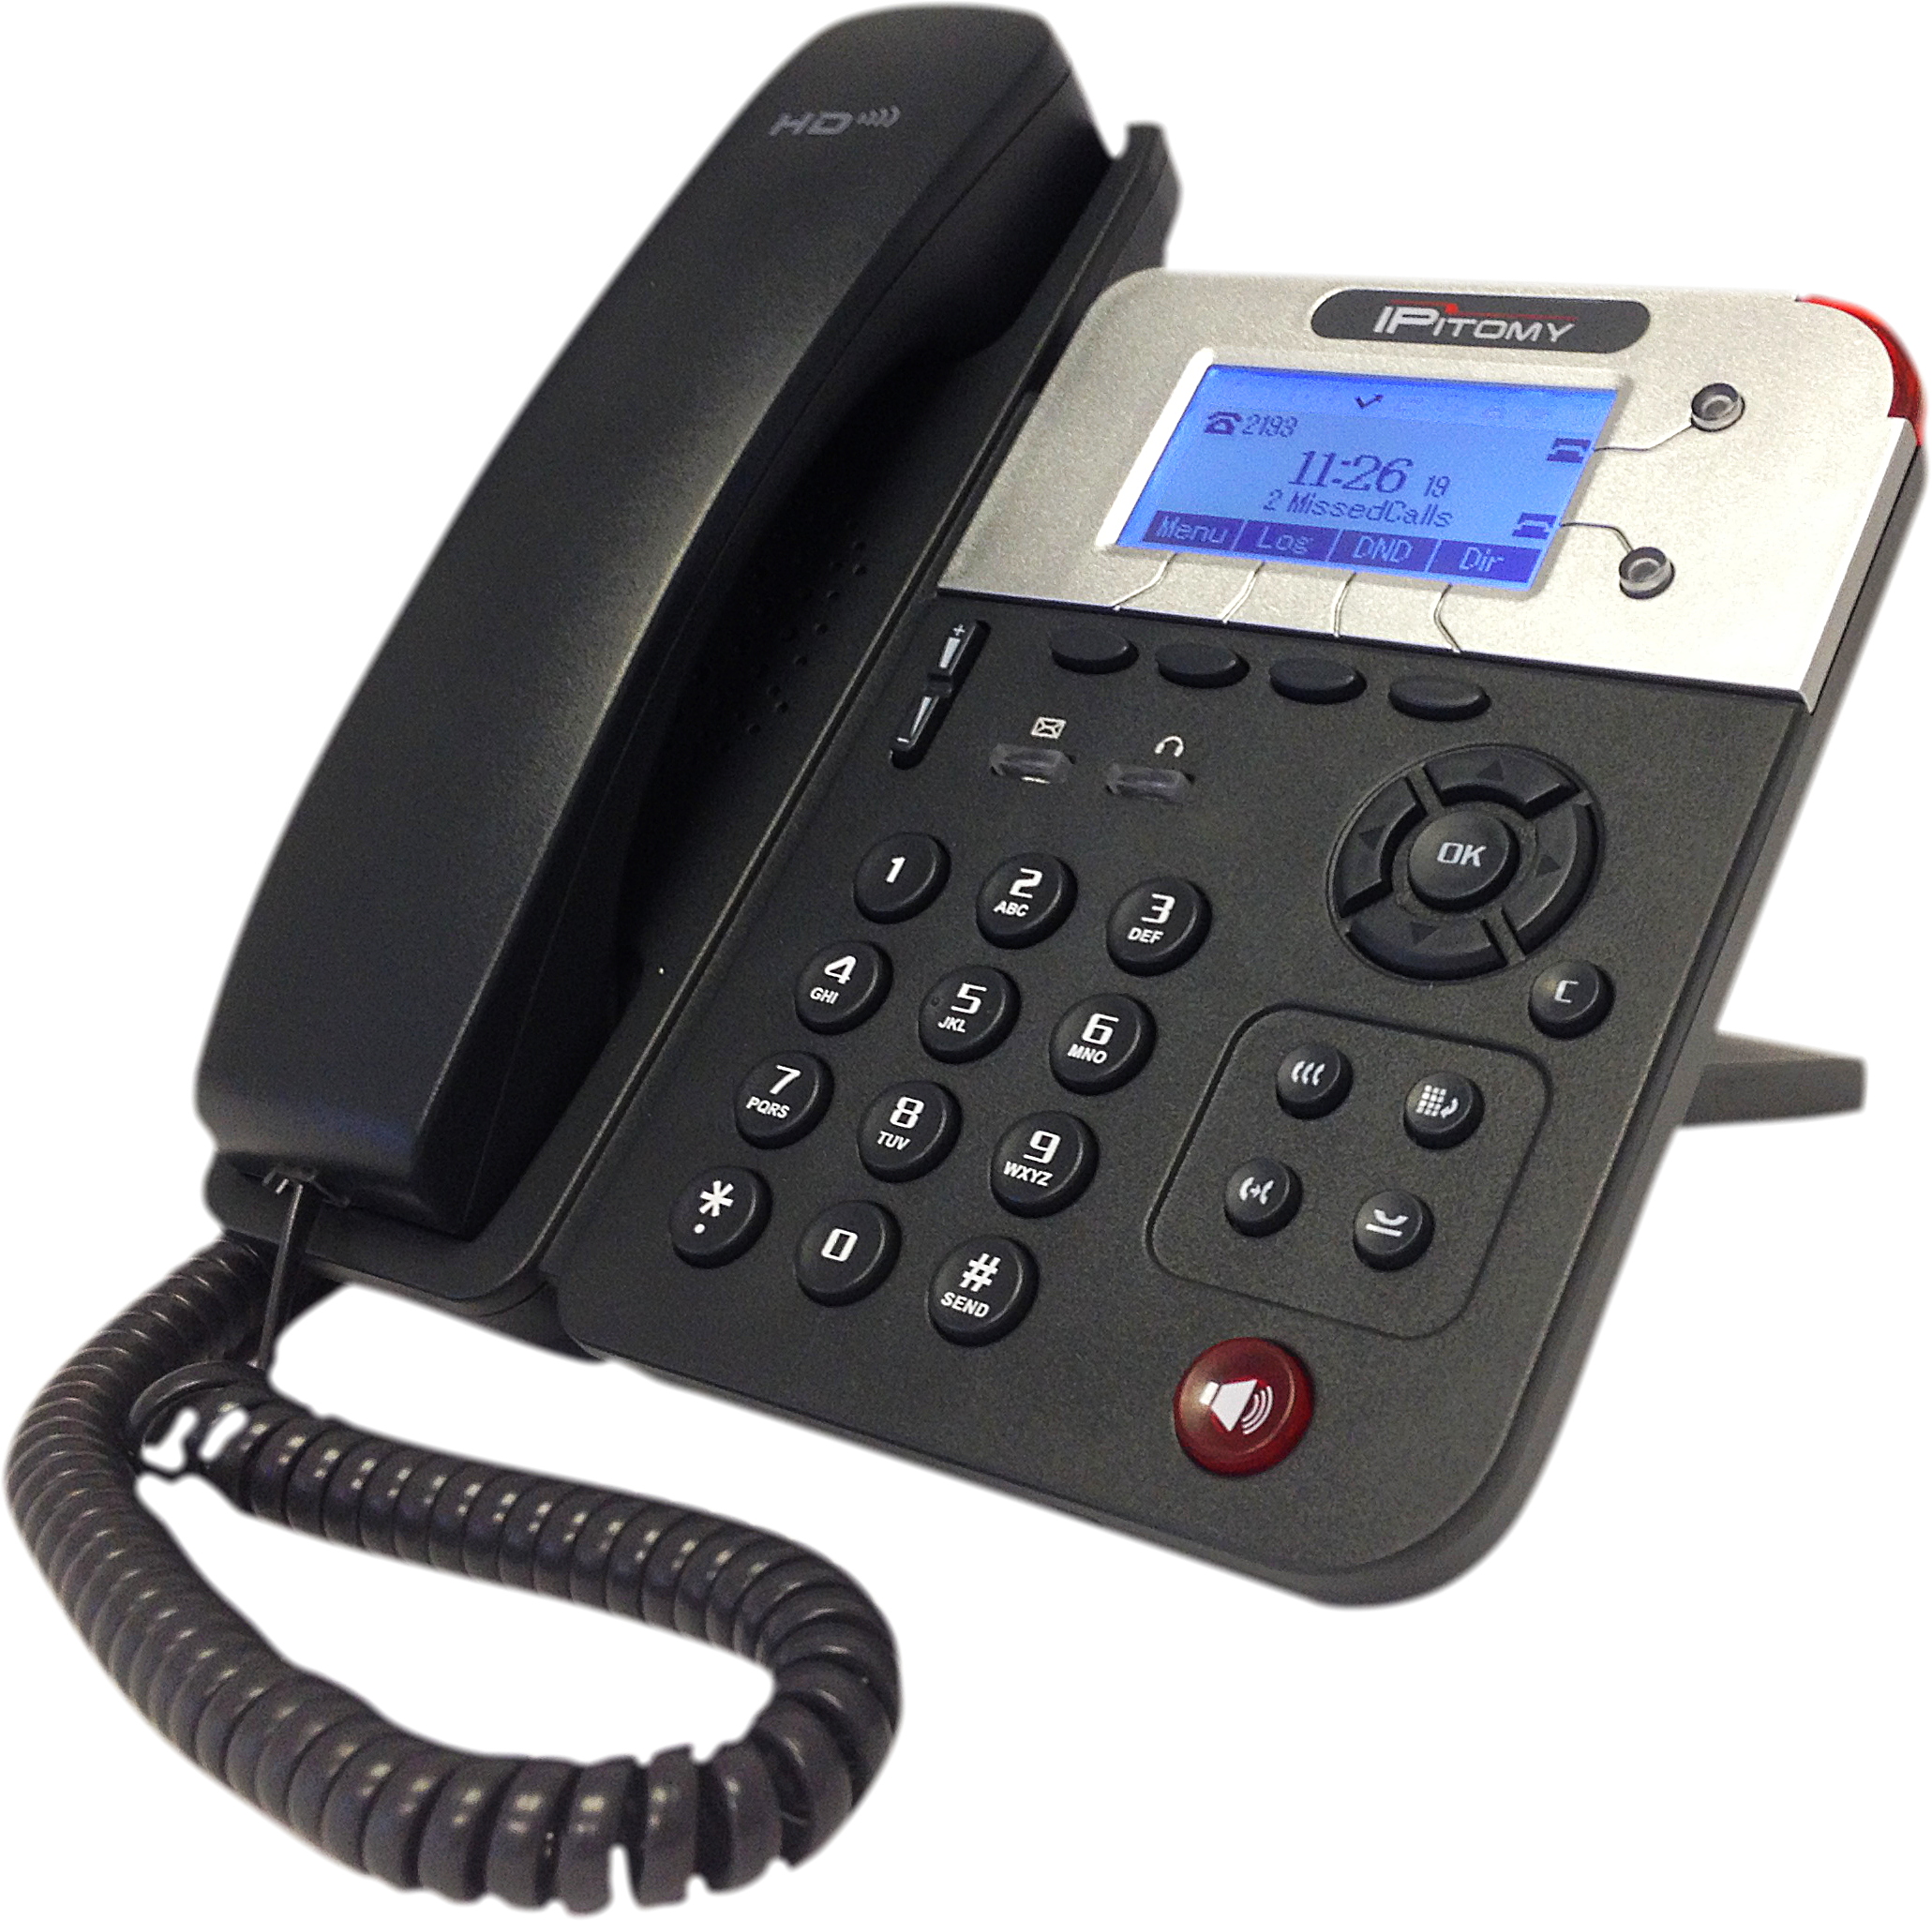 IP220 2 Line phone